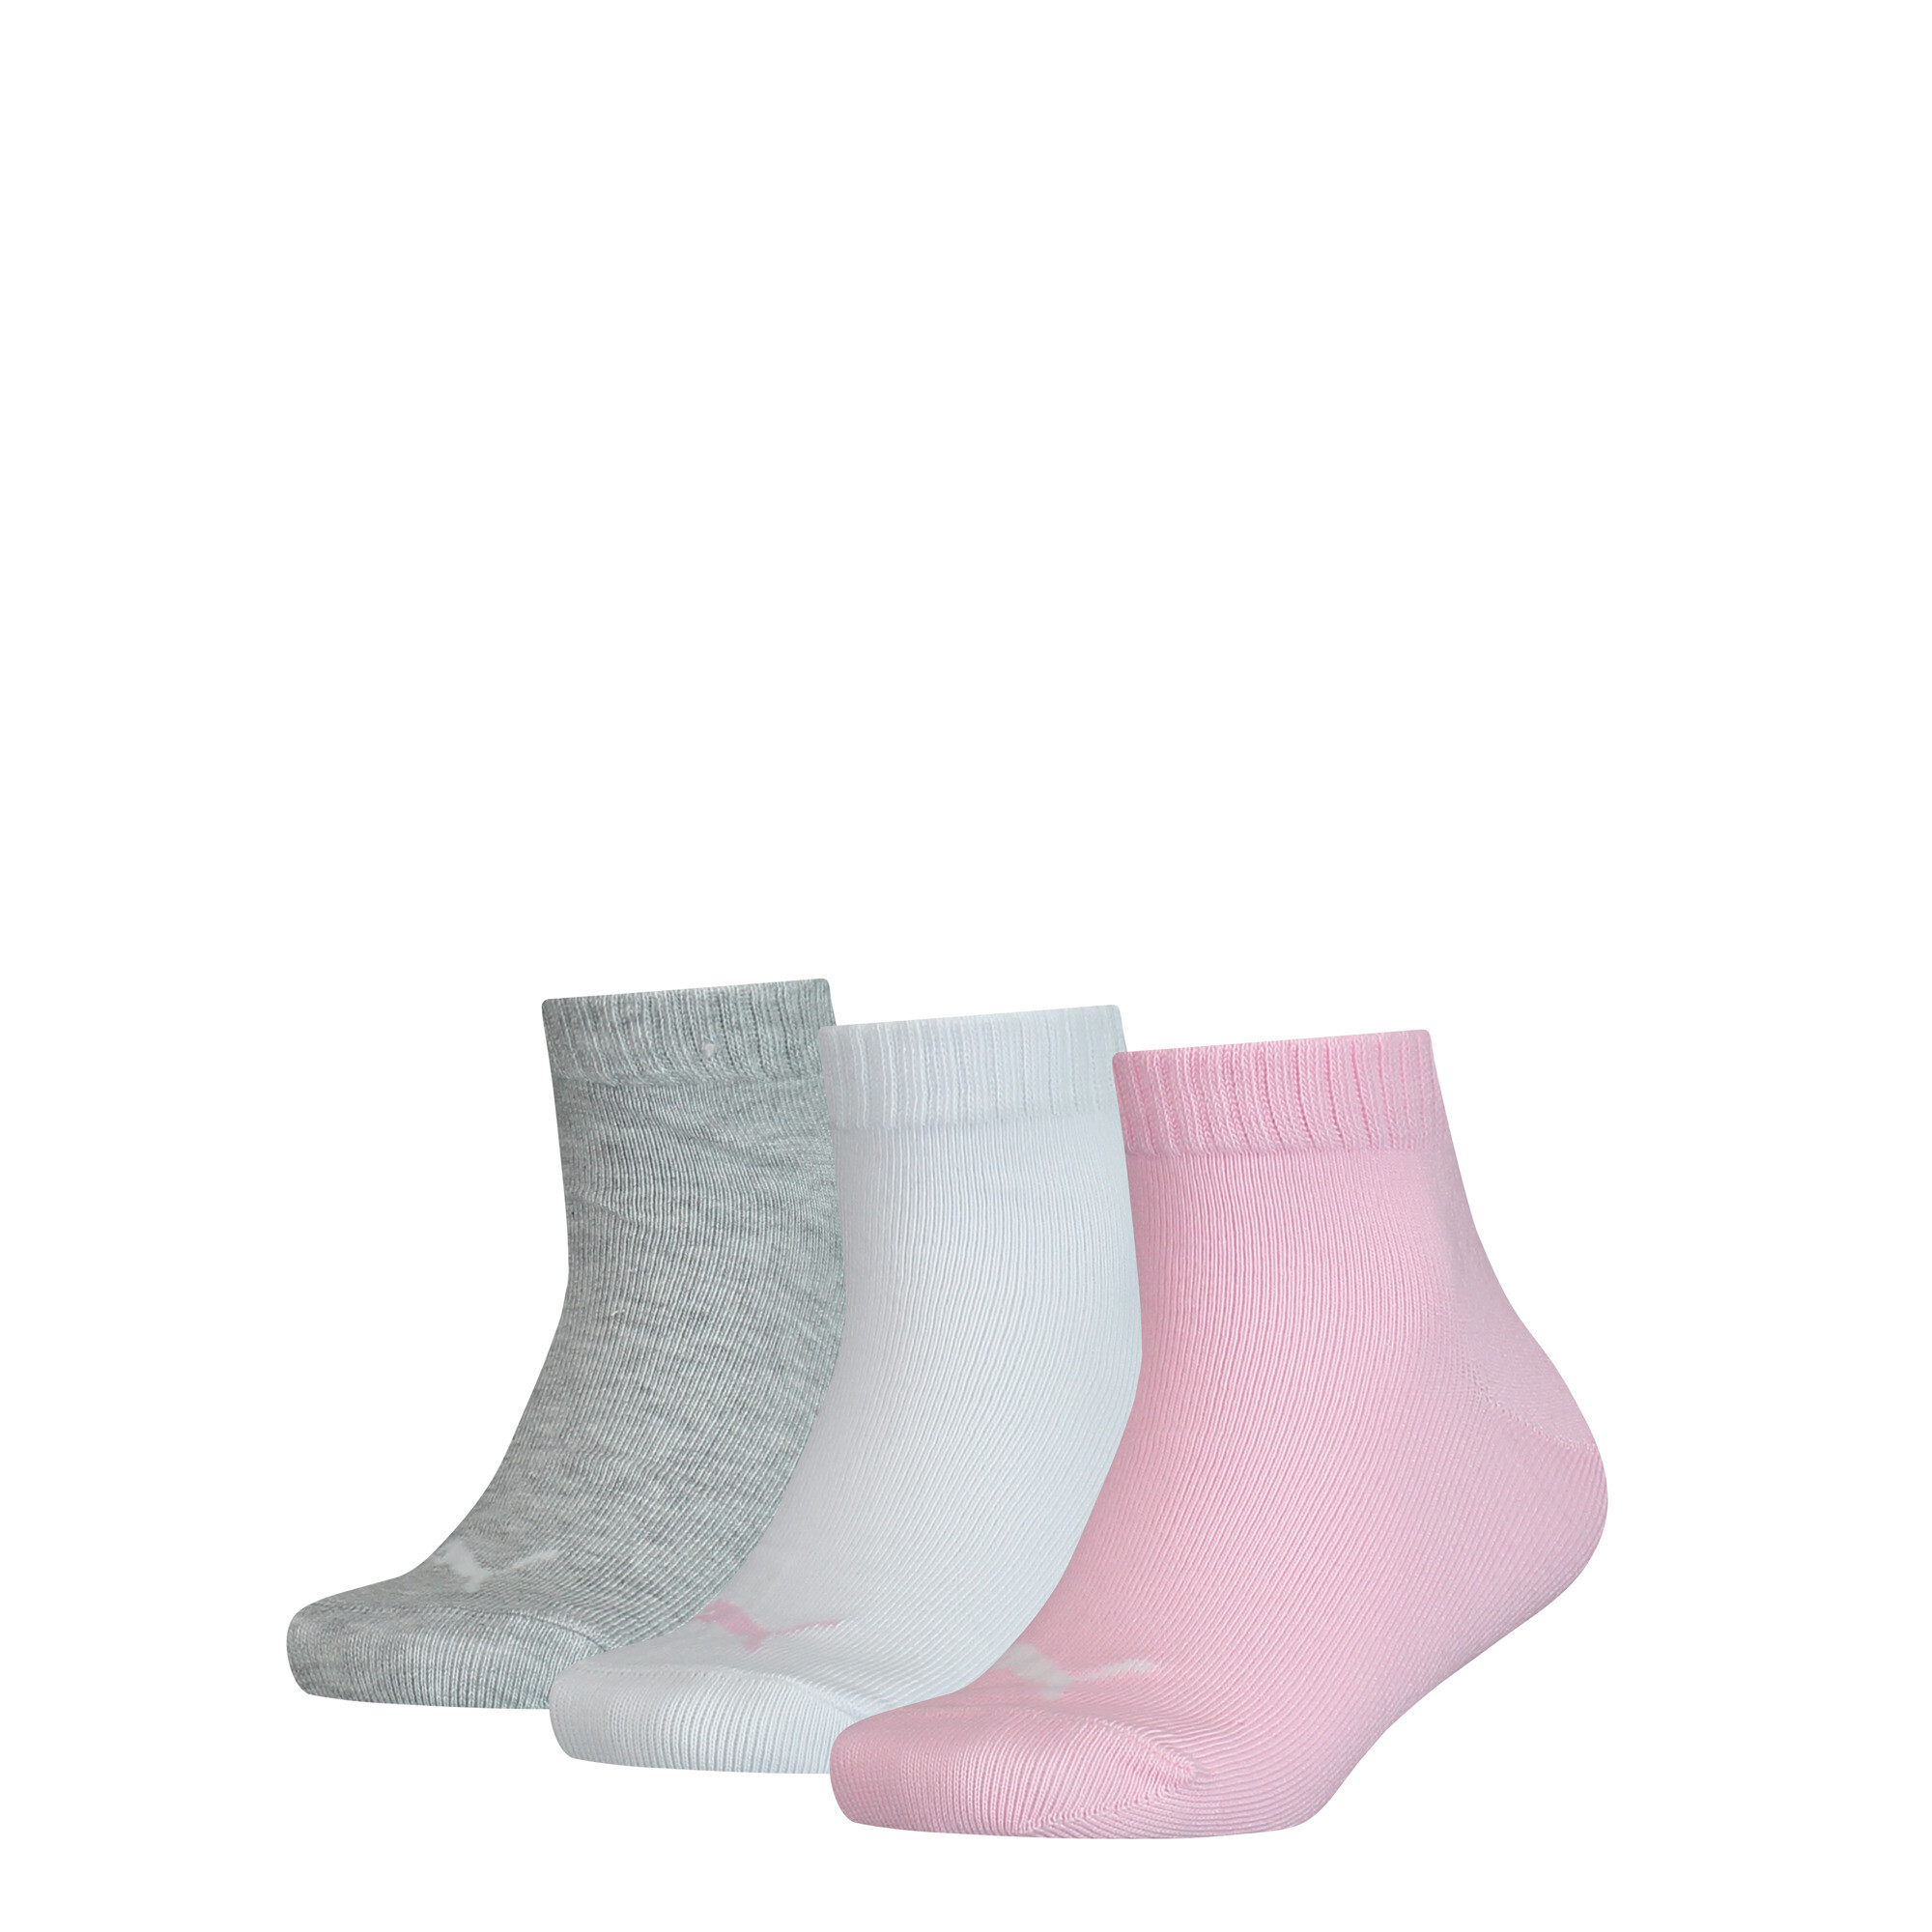 Kids' PUMA Quarter Socks 3 Pack In Pink, Size 35-38